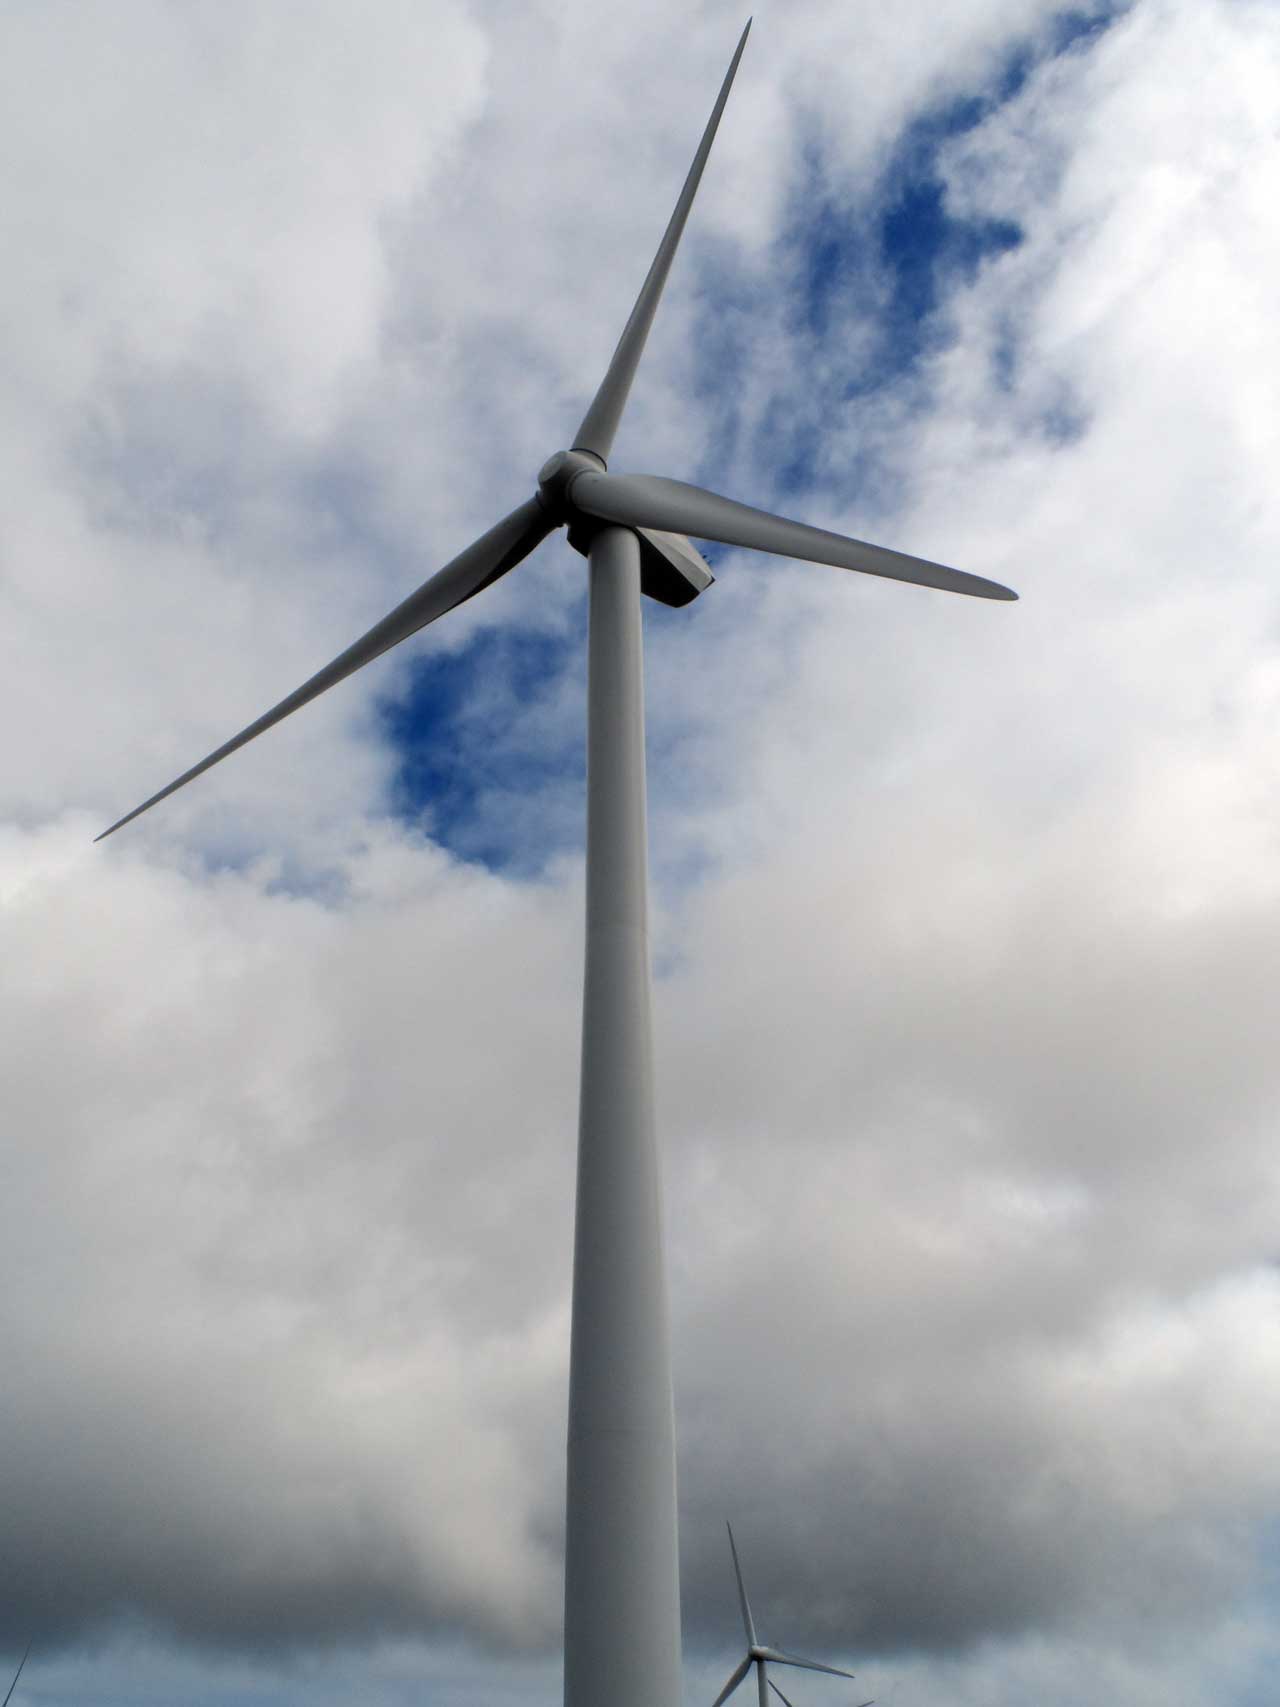 Photo: Open Day For Community At Gordonbush Wind Farm